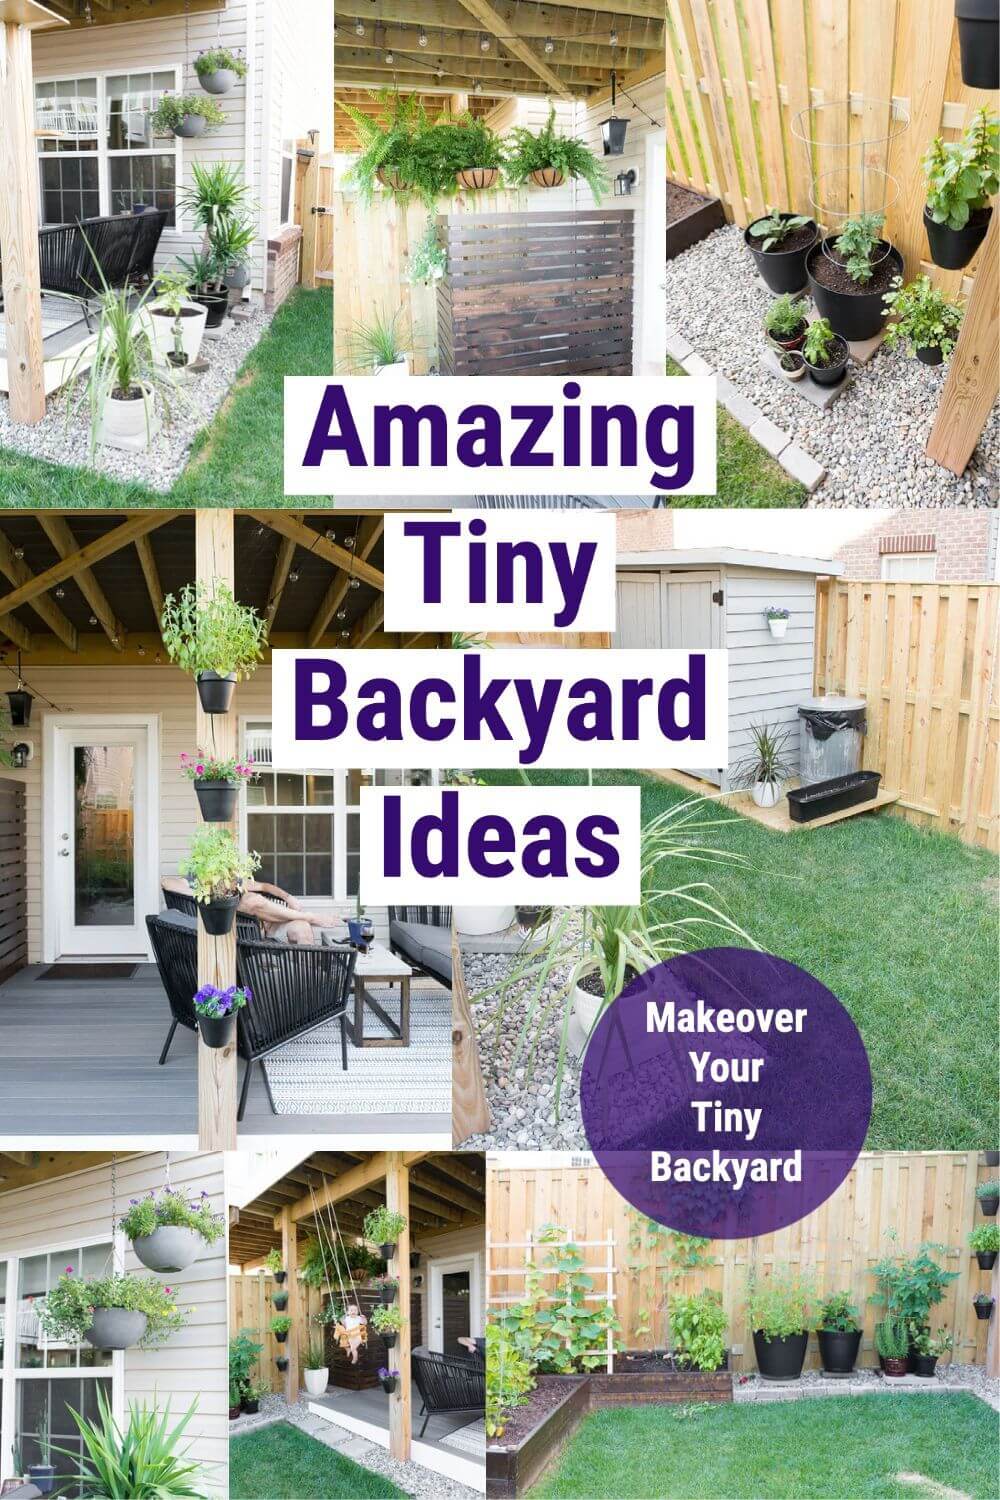 Tiny Backyard Ideas & An Update on My Tiny Backyard & Garden